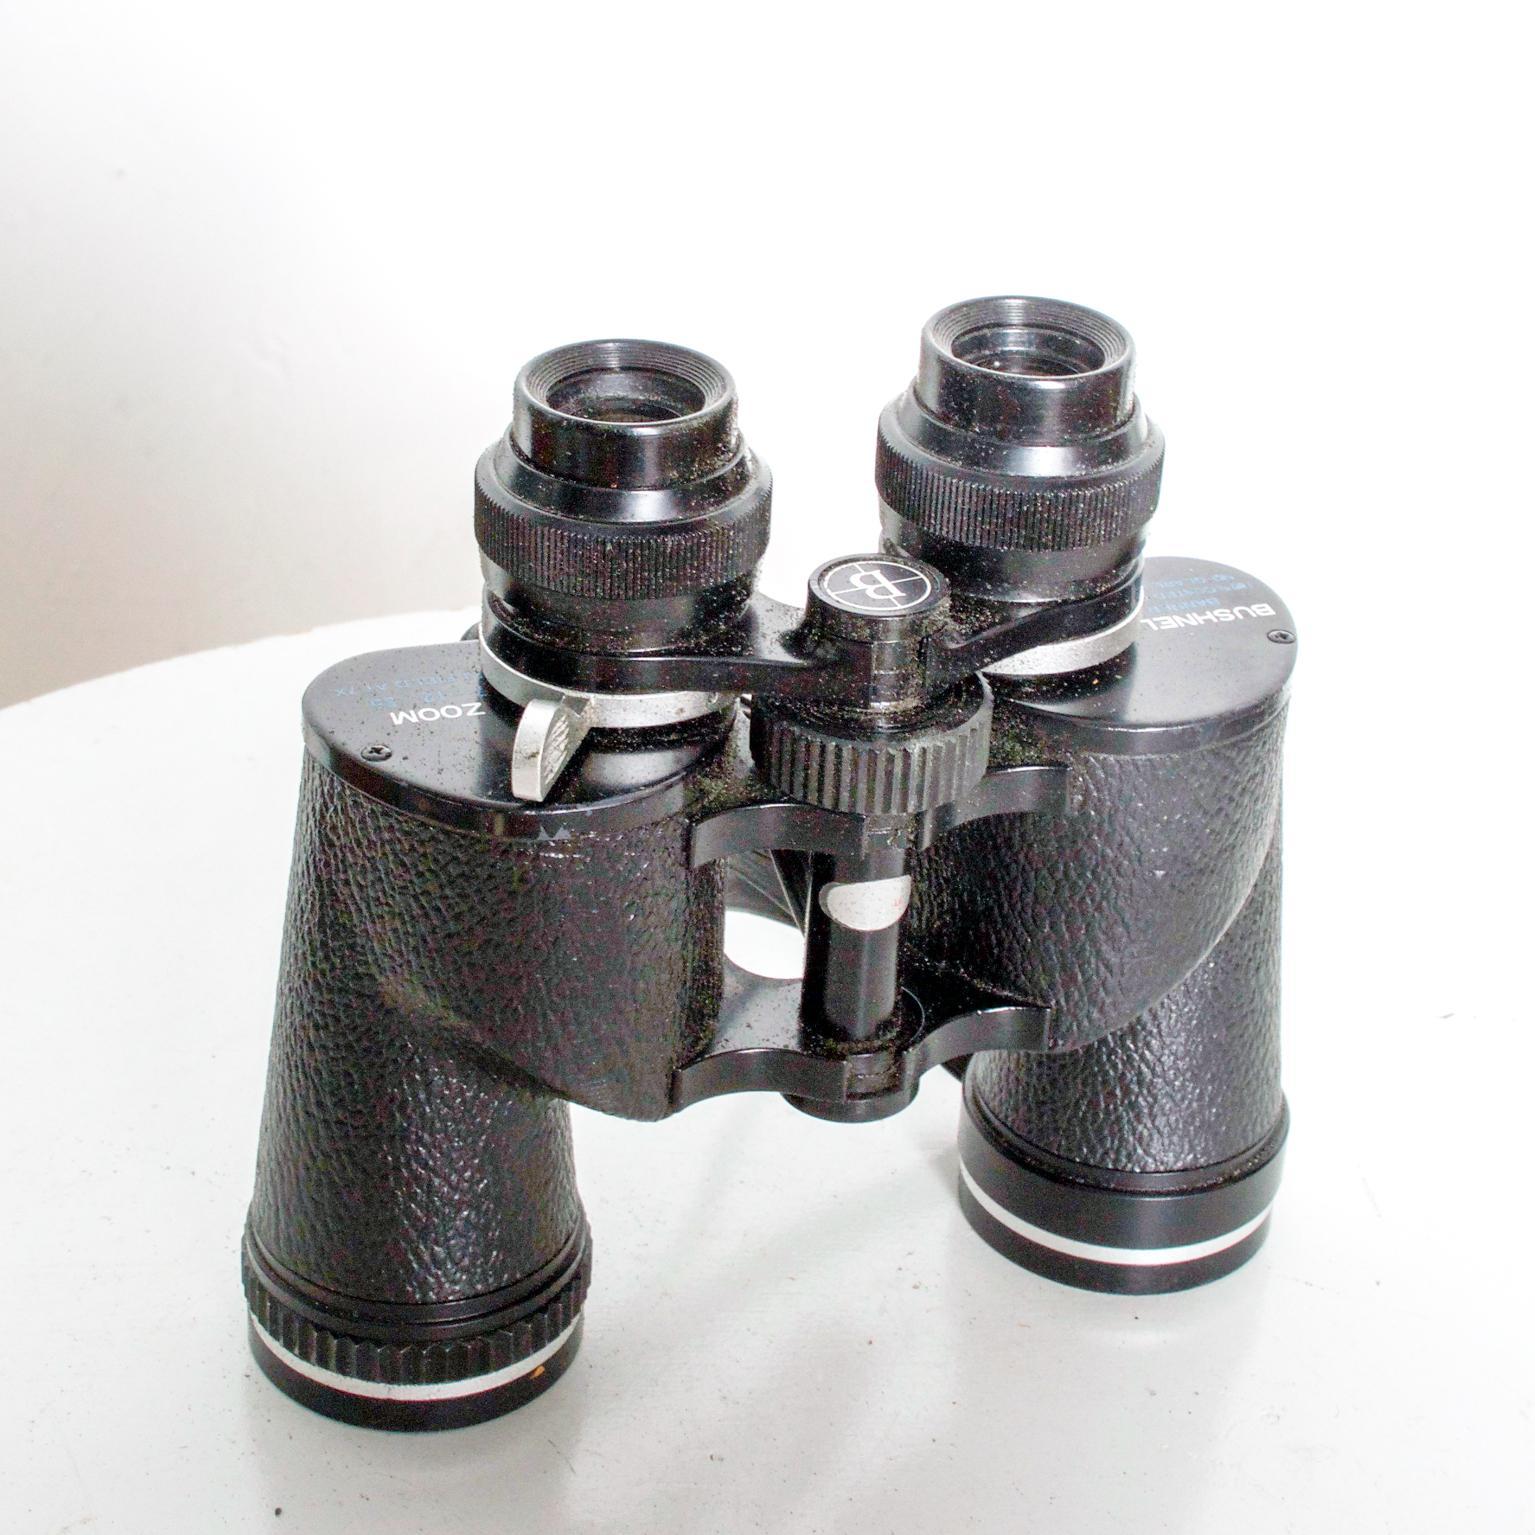 American Vintage Bushnell Binoculars with Original Case